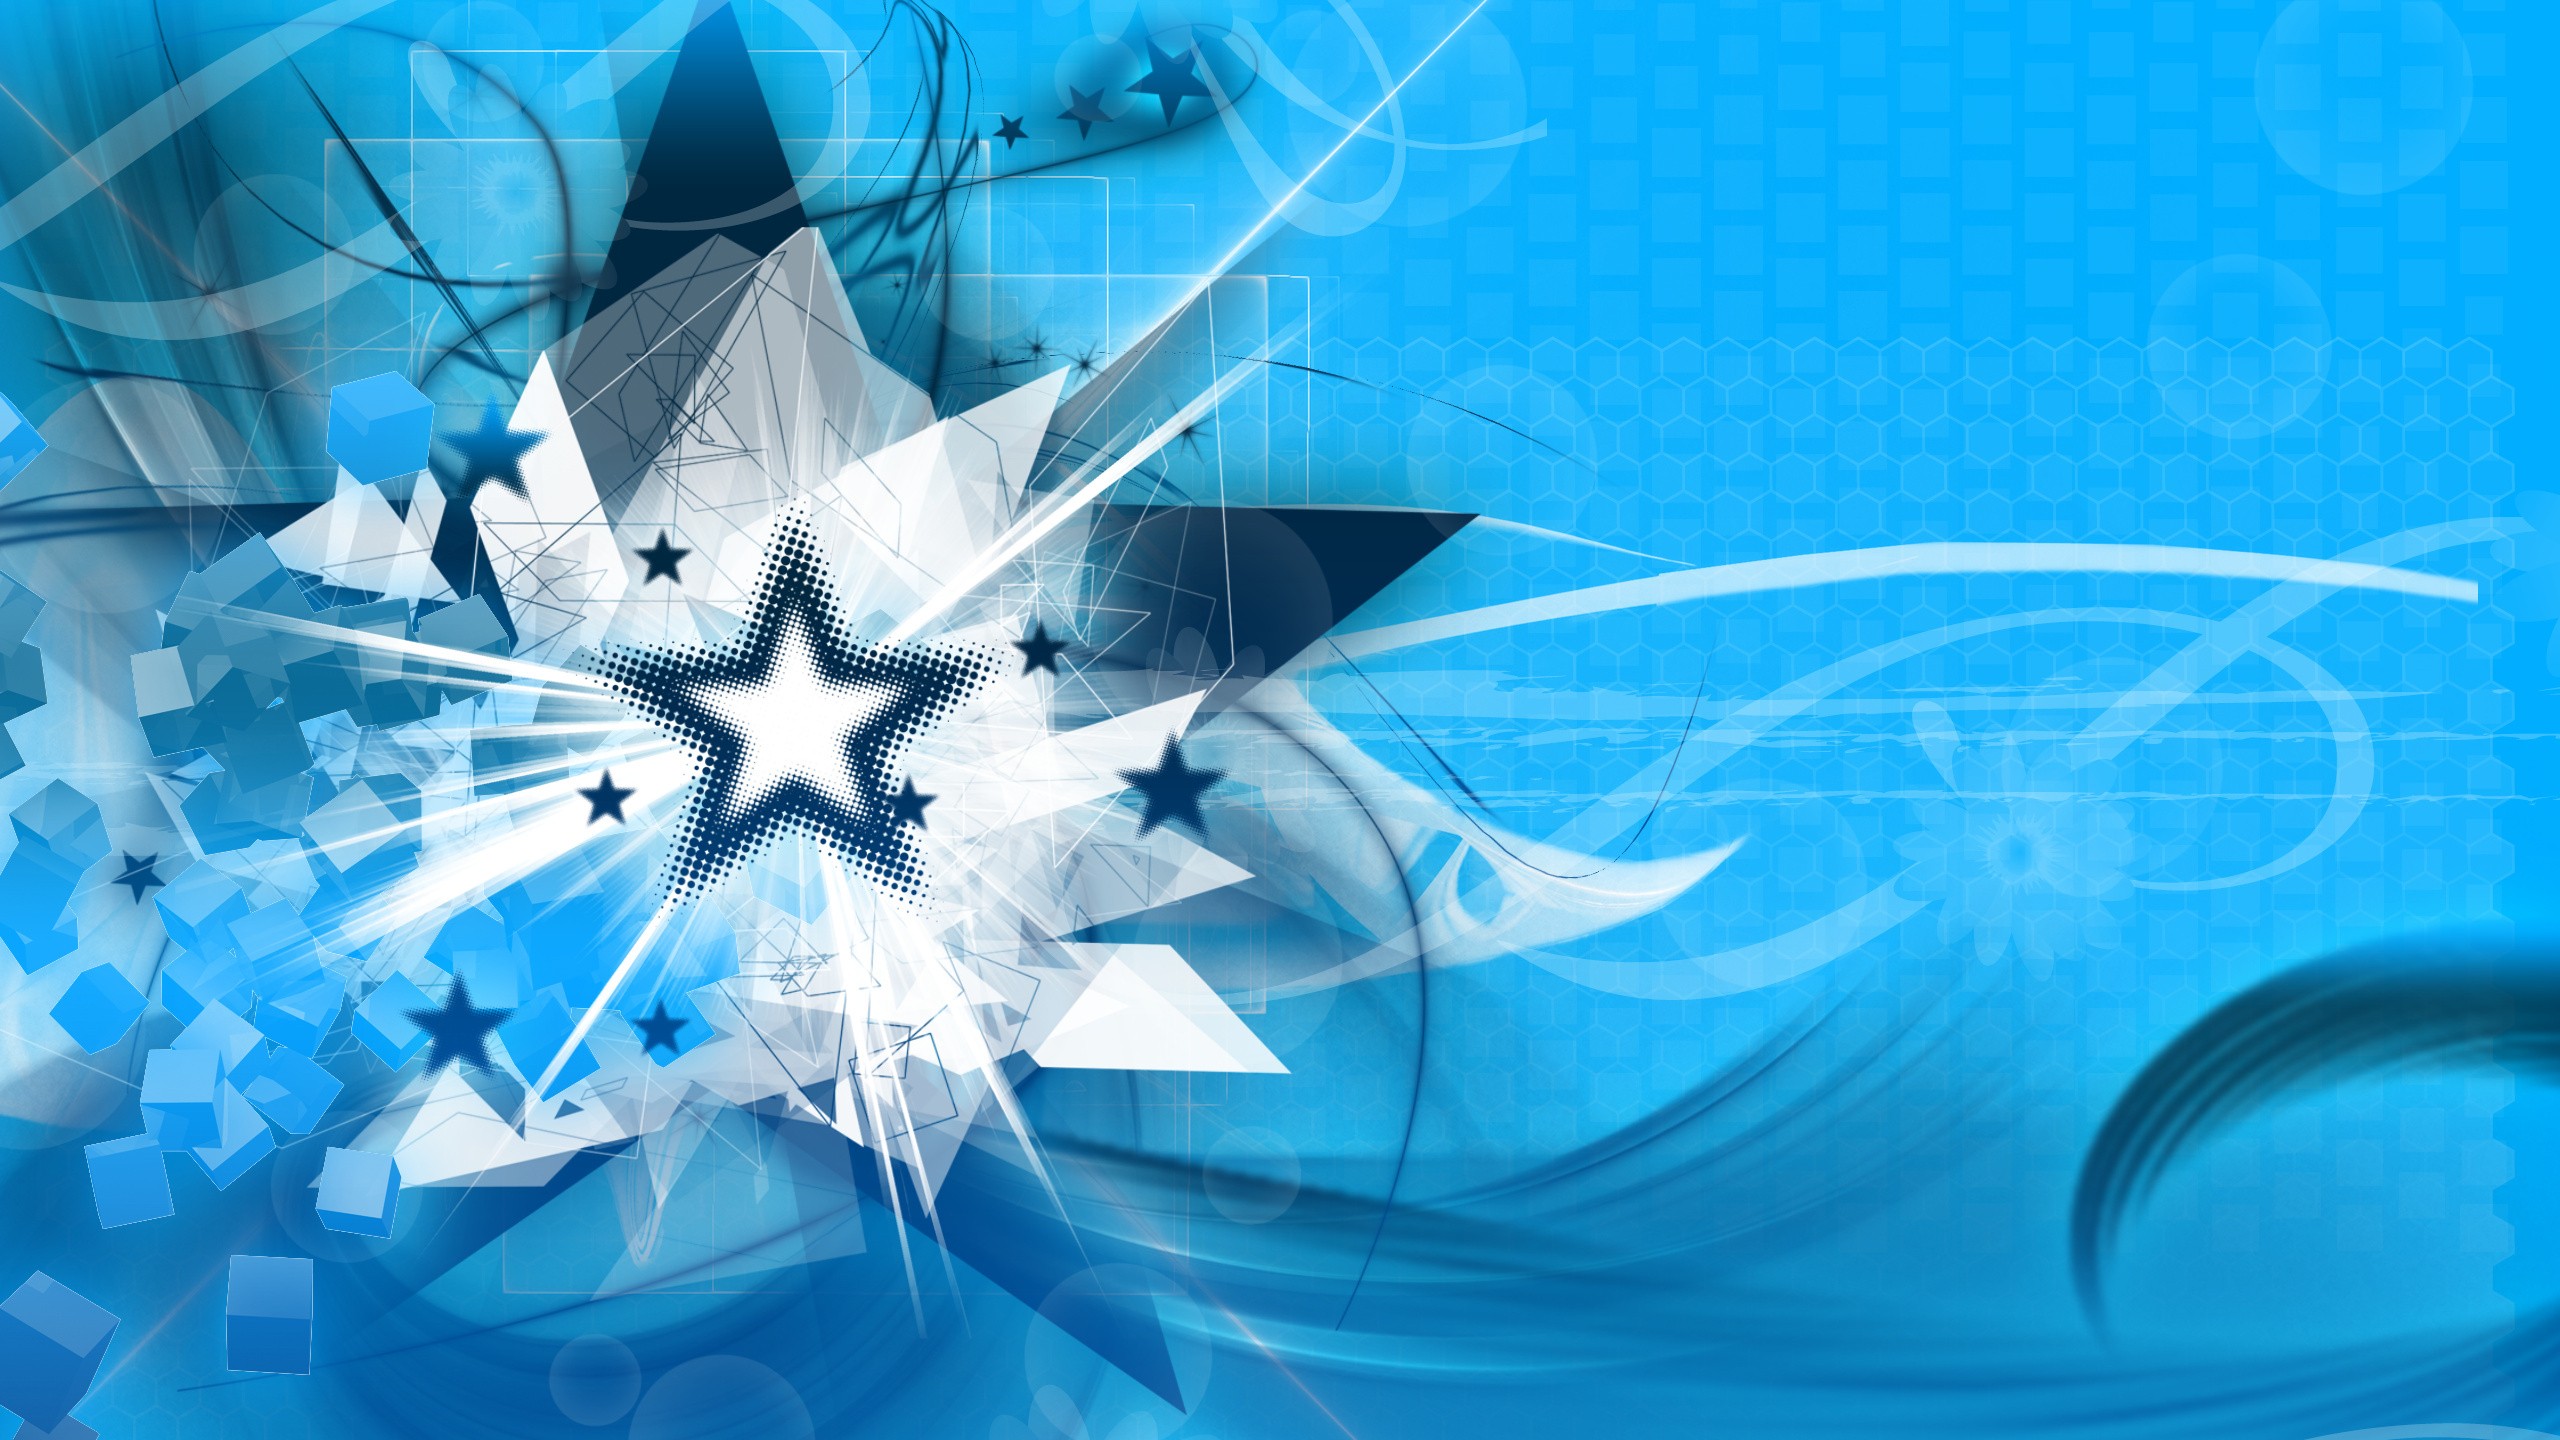 General 2560x1440 digital art stars blue background geometry shapes abstract cyan